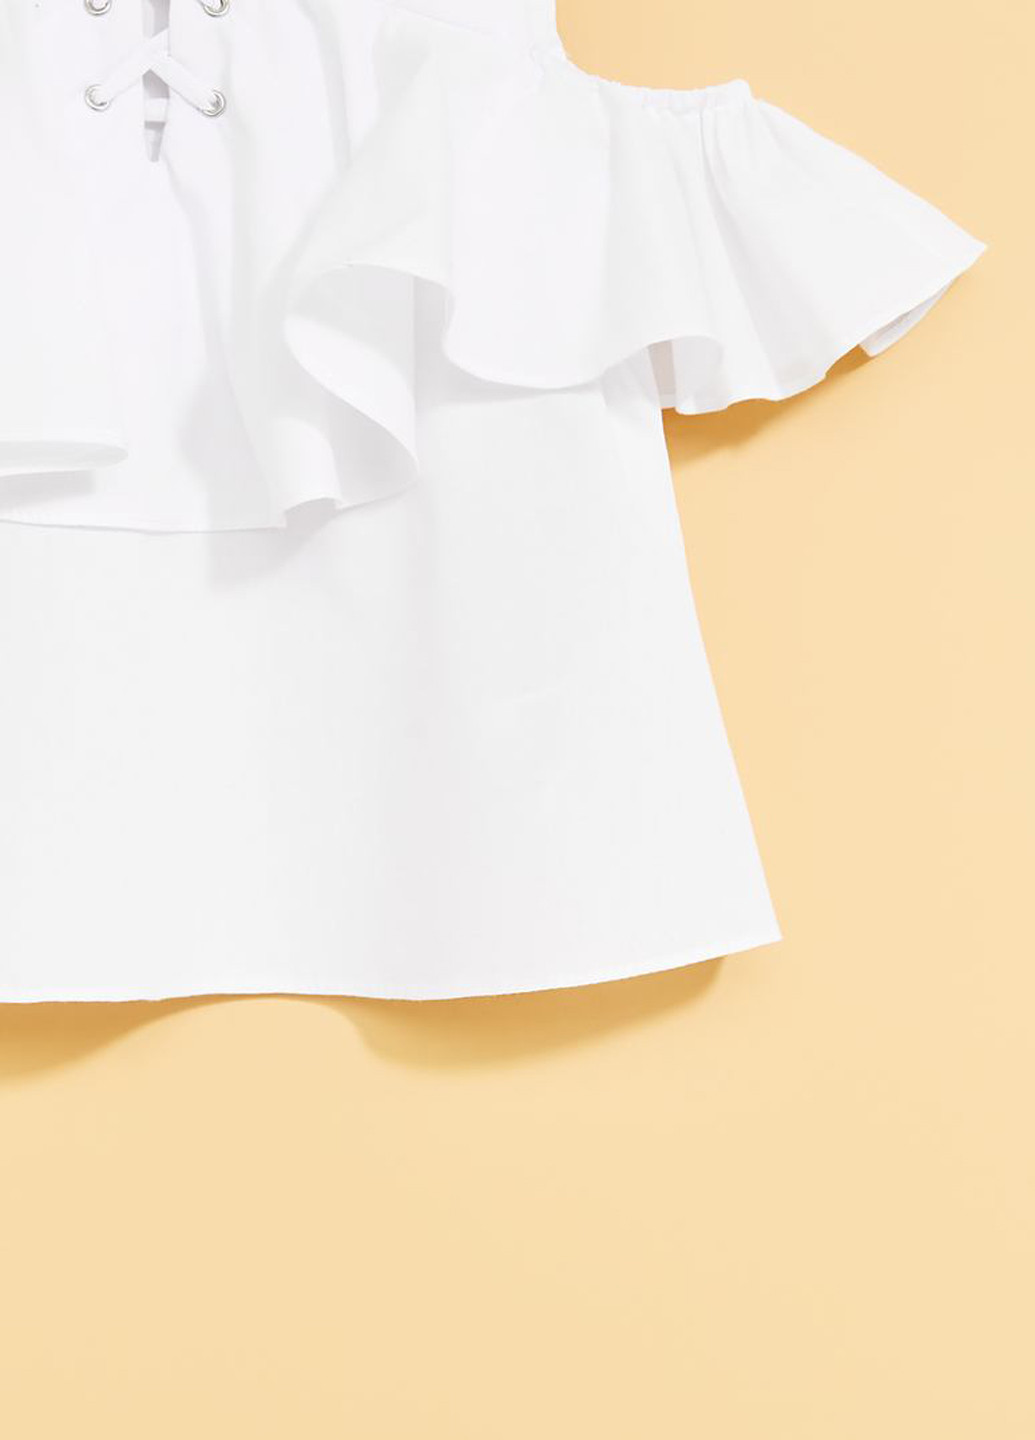 Белая однотонная блузка без рукава Zara летняя